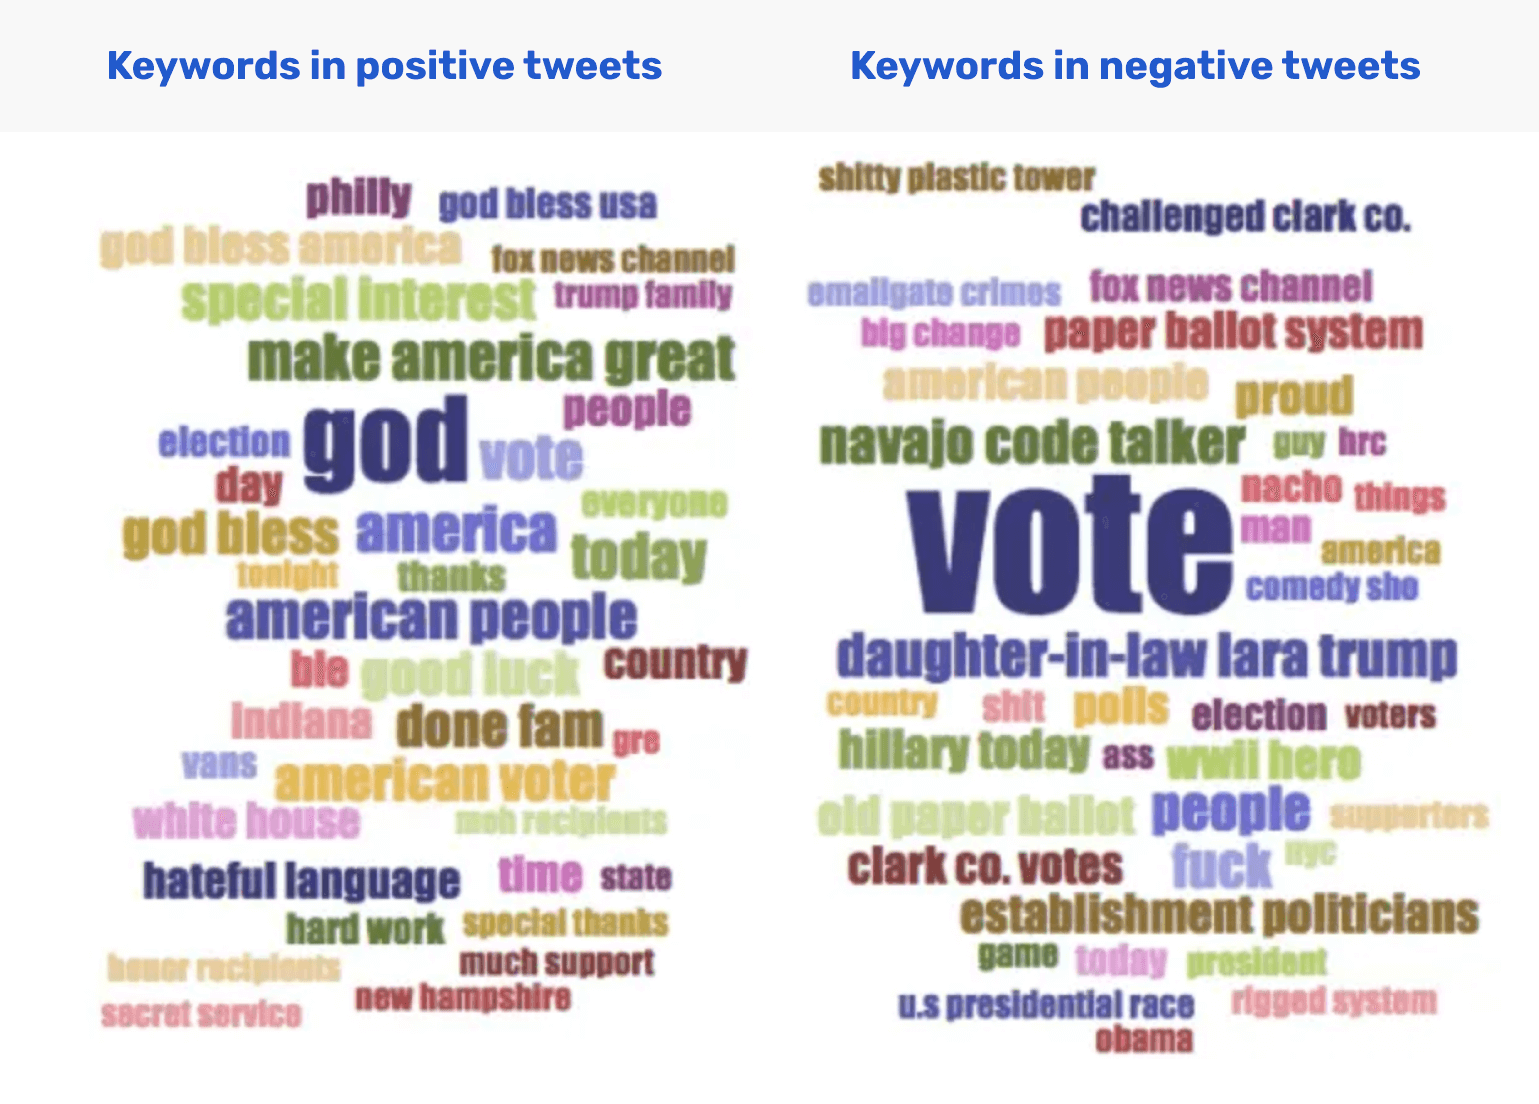 Positive Keywords and negative keywords in tweets